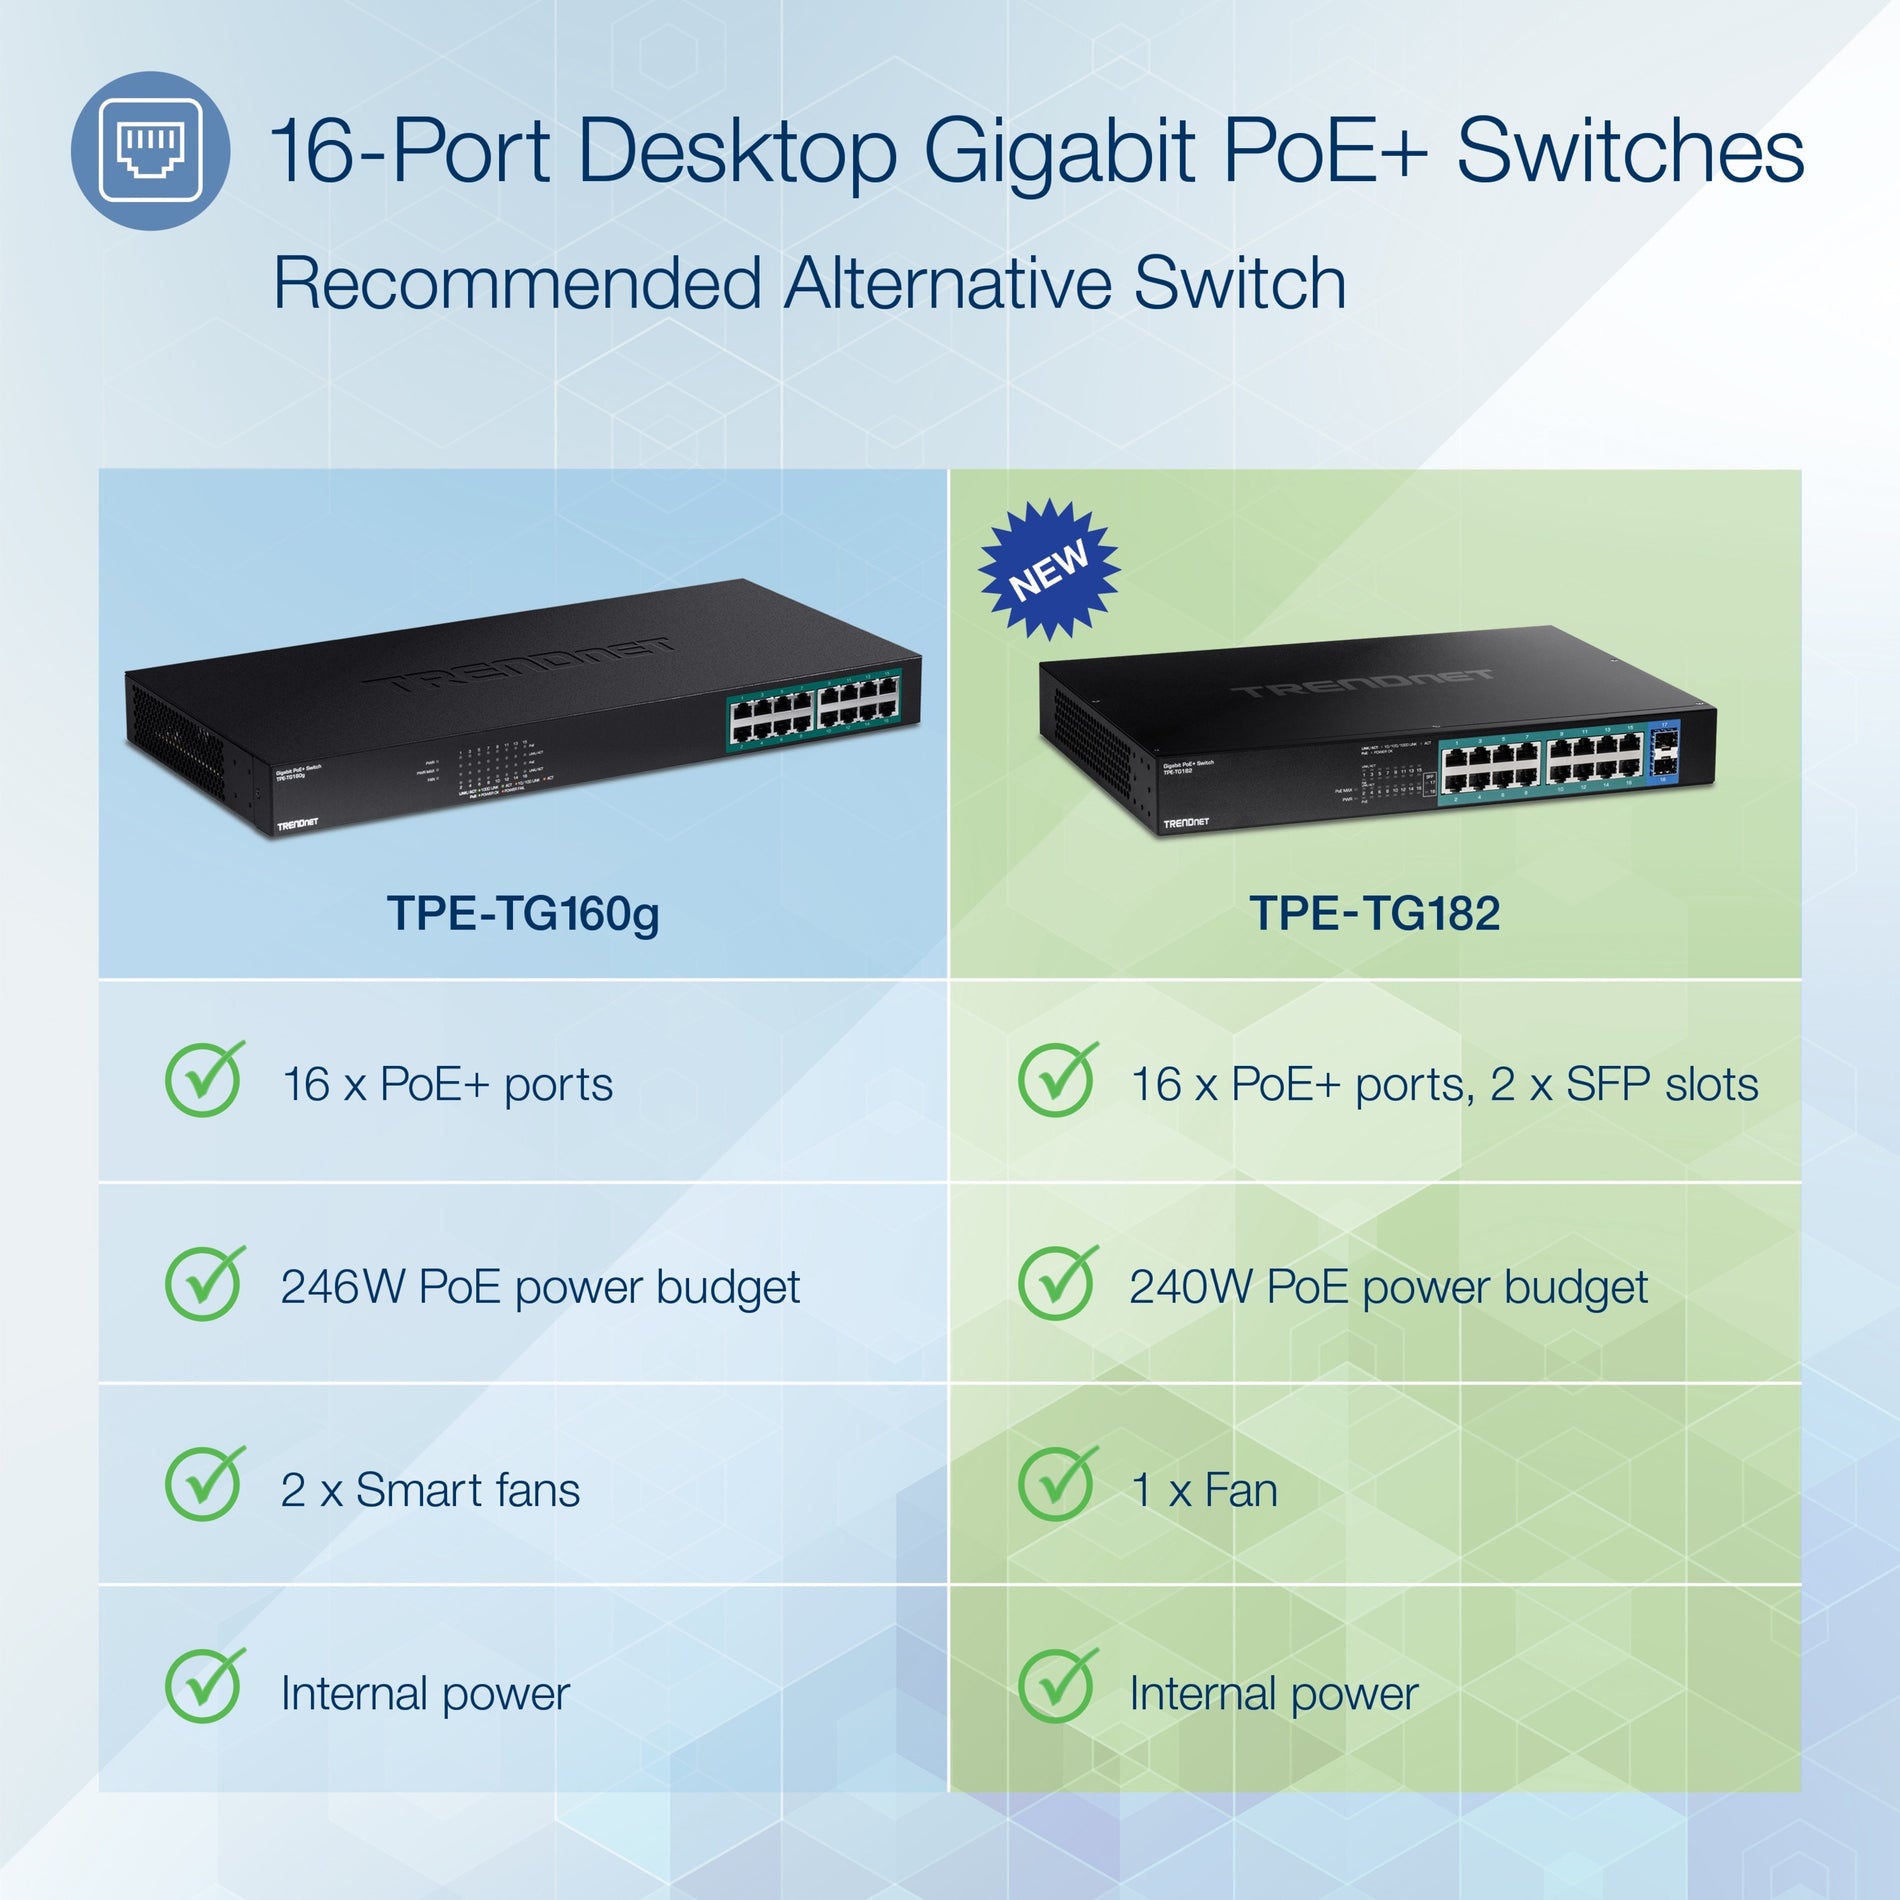 TRENDnet TPE-TG182 18-Port Gigabit PoE+ Switch, Rack-Mountable, 240W PoE Budget